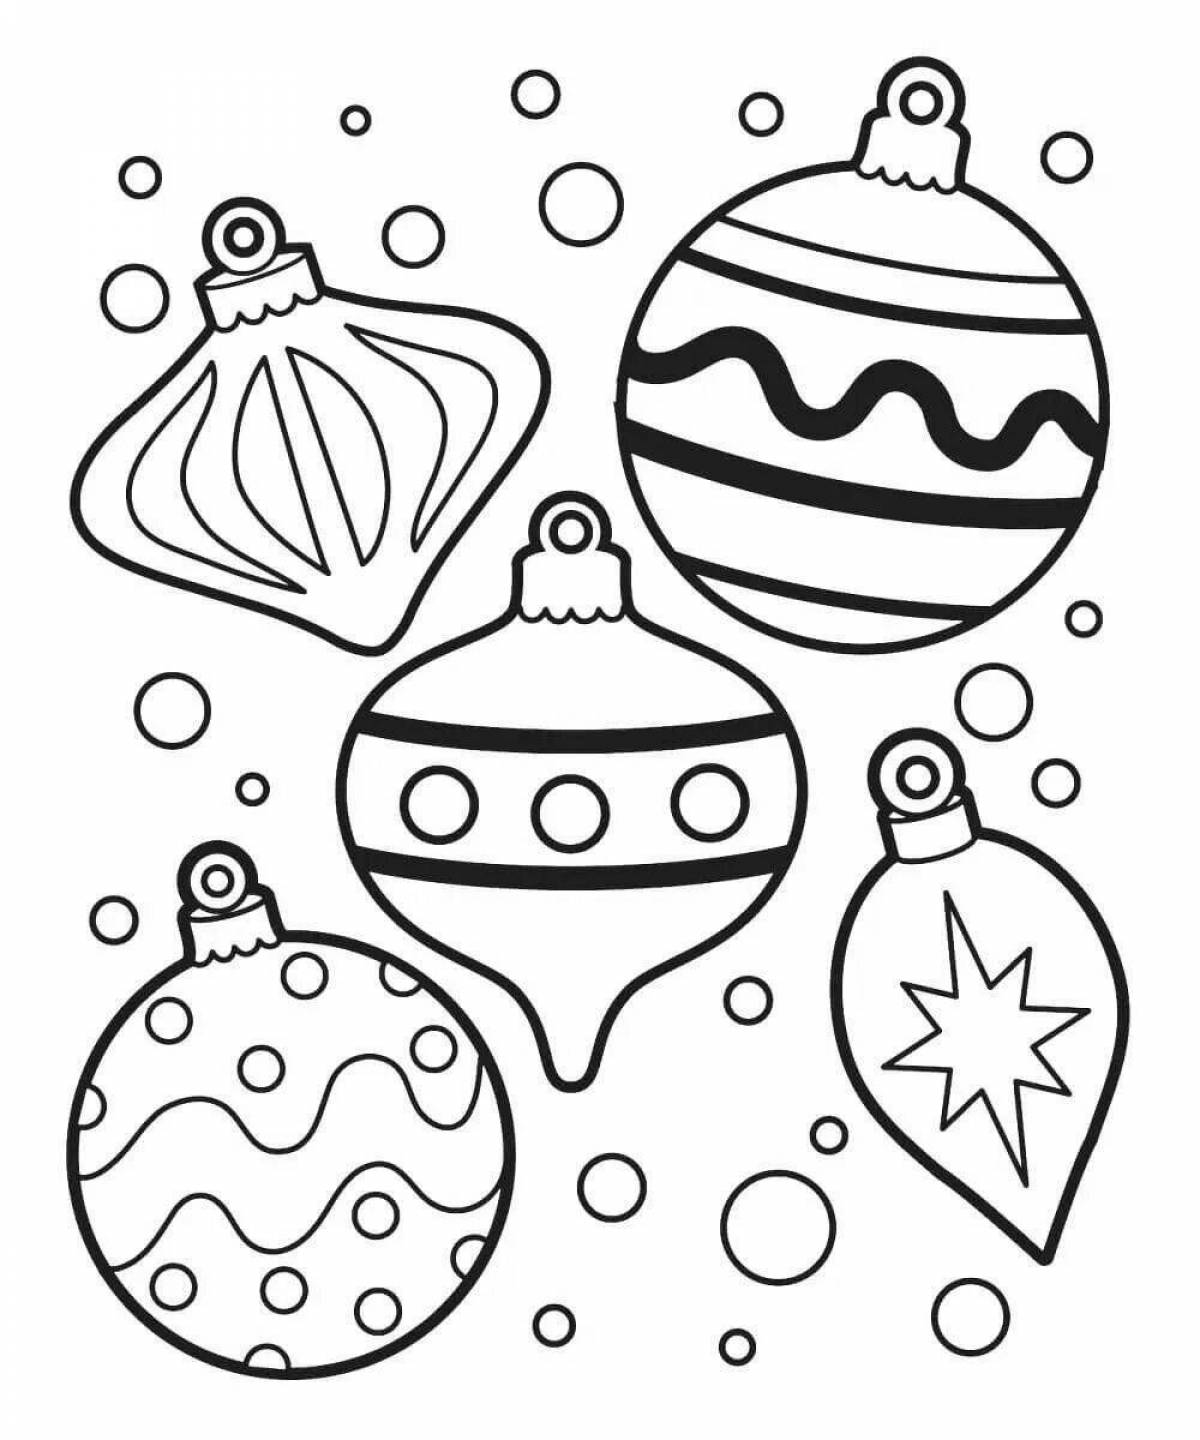 Christmas ball coloring book for kids